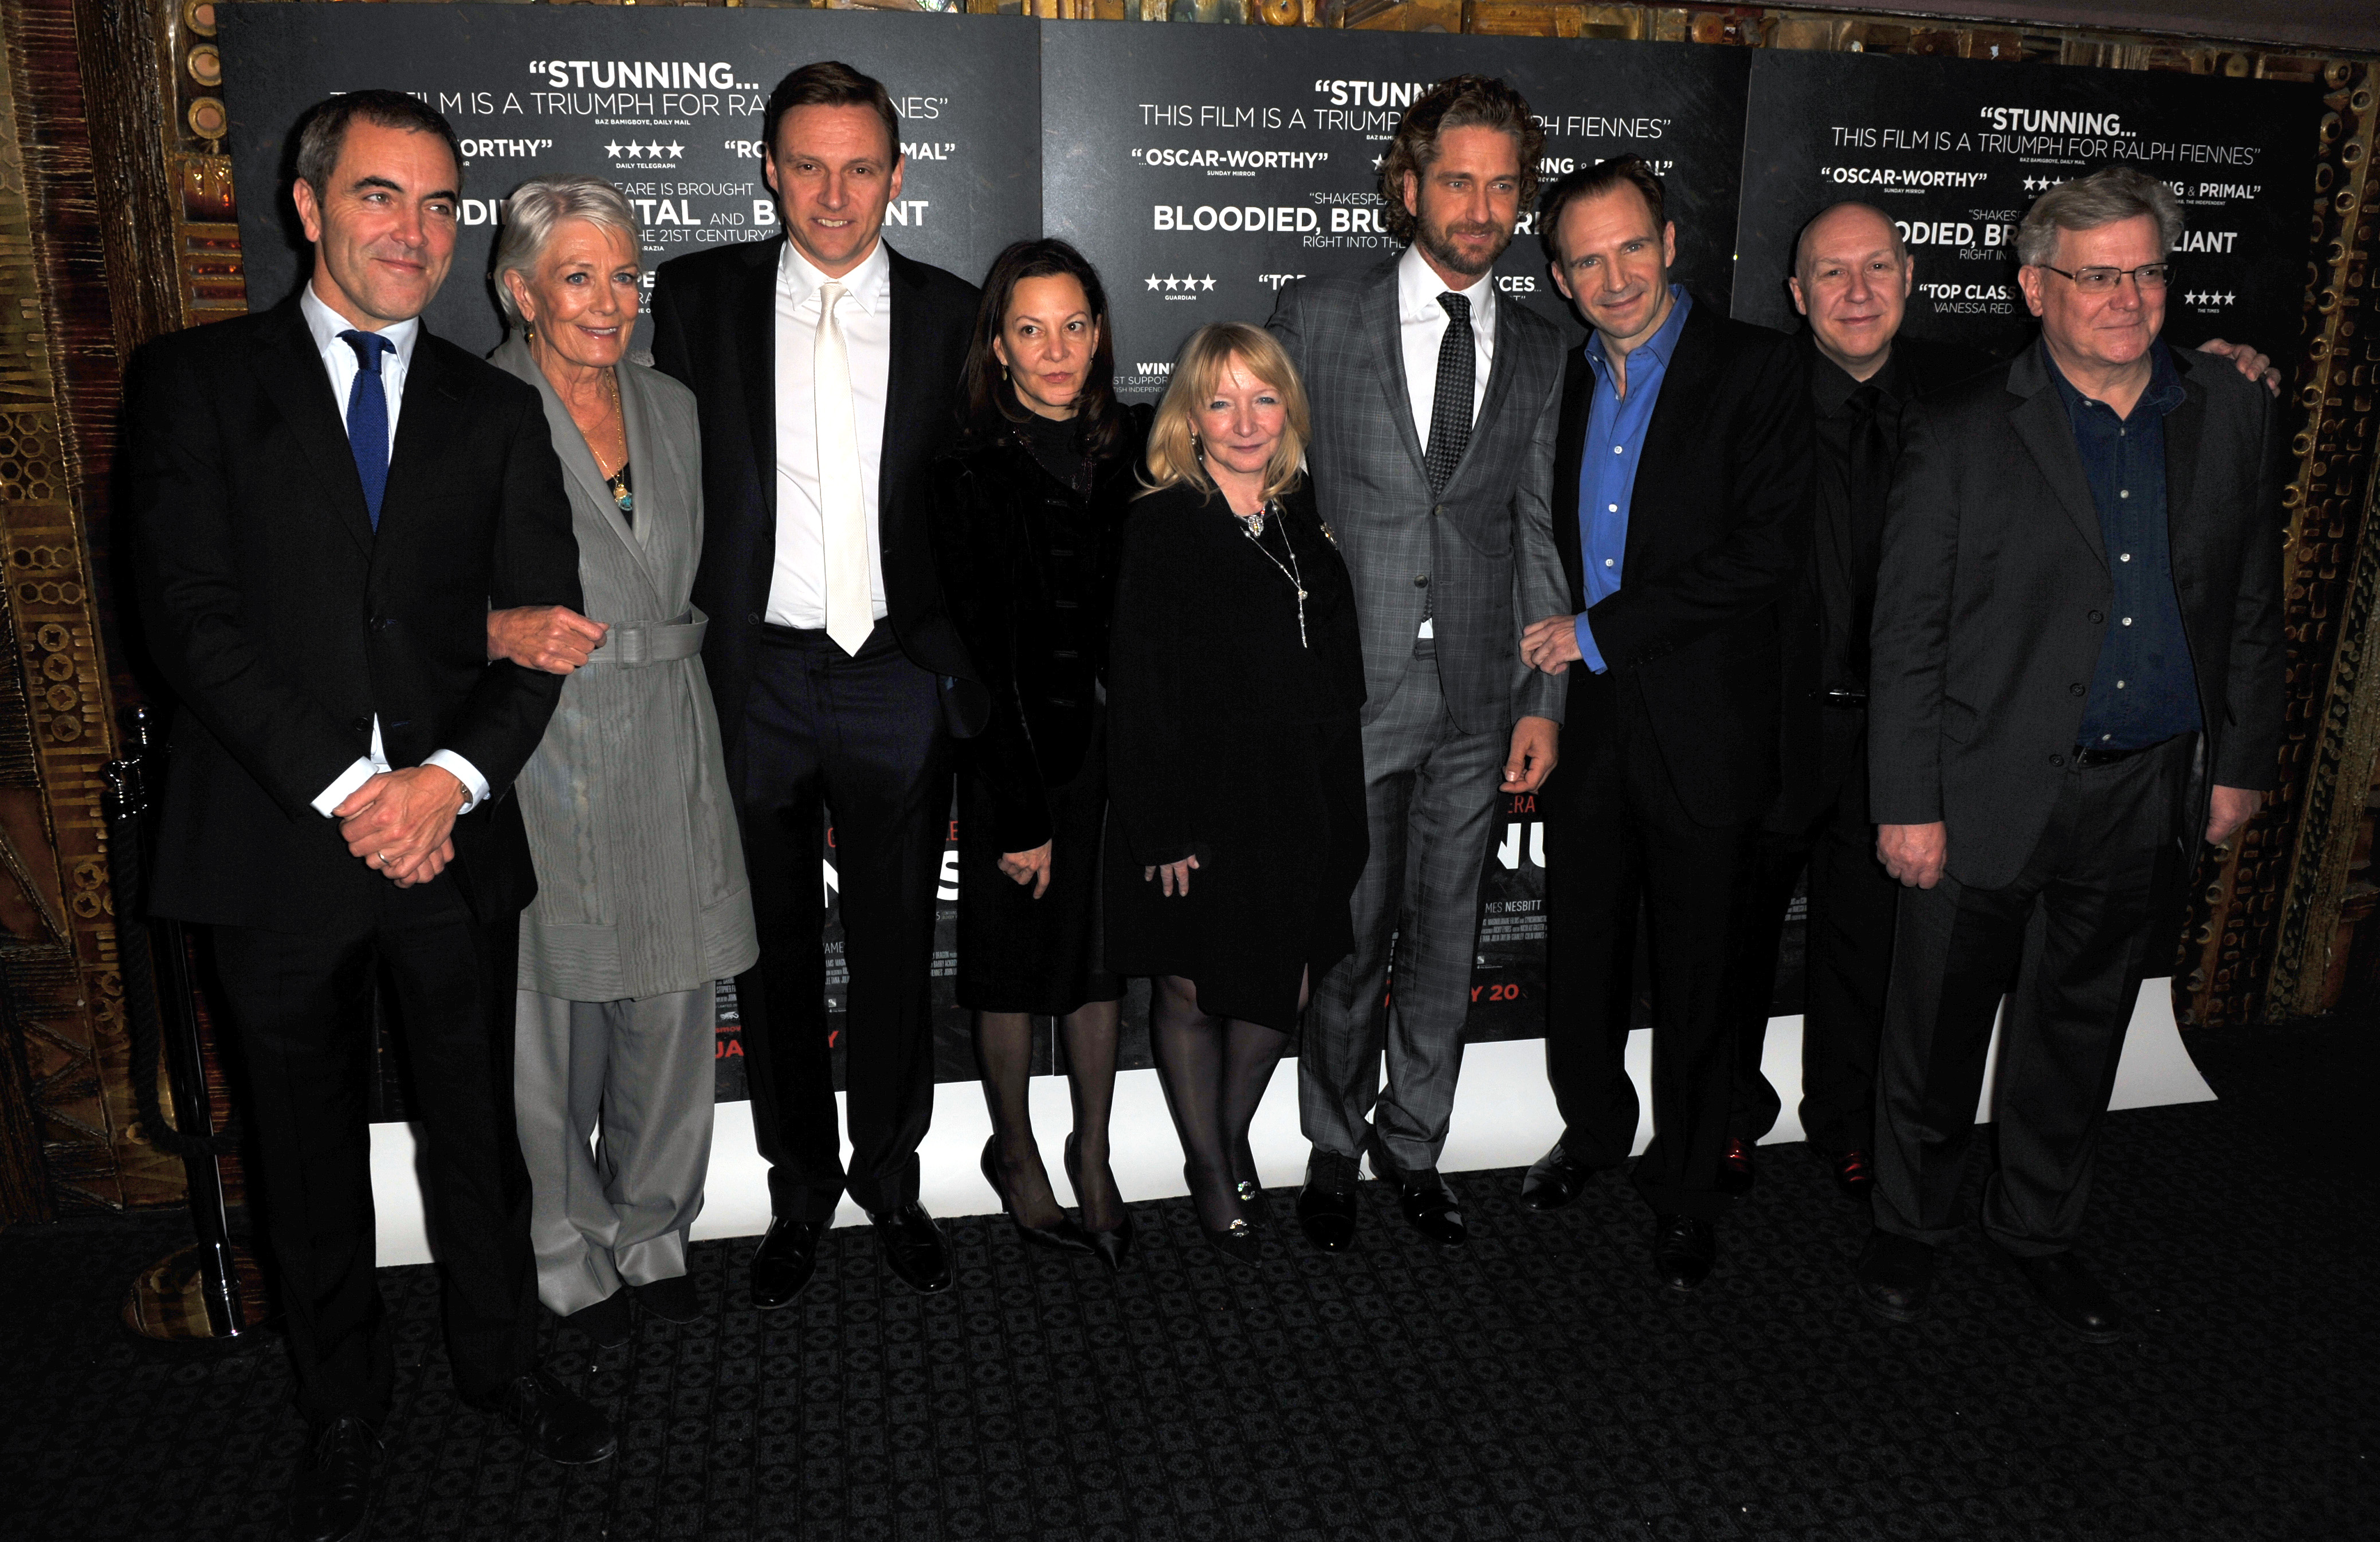 James Nesbitt, Vanessa Redgrave, Zygi Kamasa, Gerard Butler, Ralph Fiennes at the UK Premiere of Coriolanus.